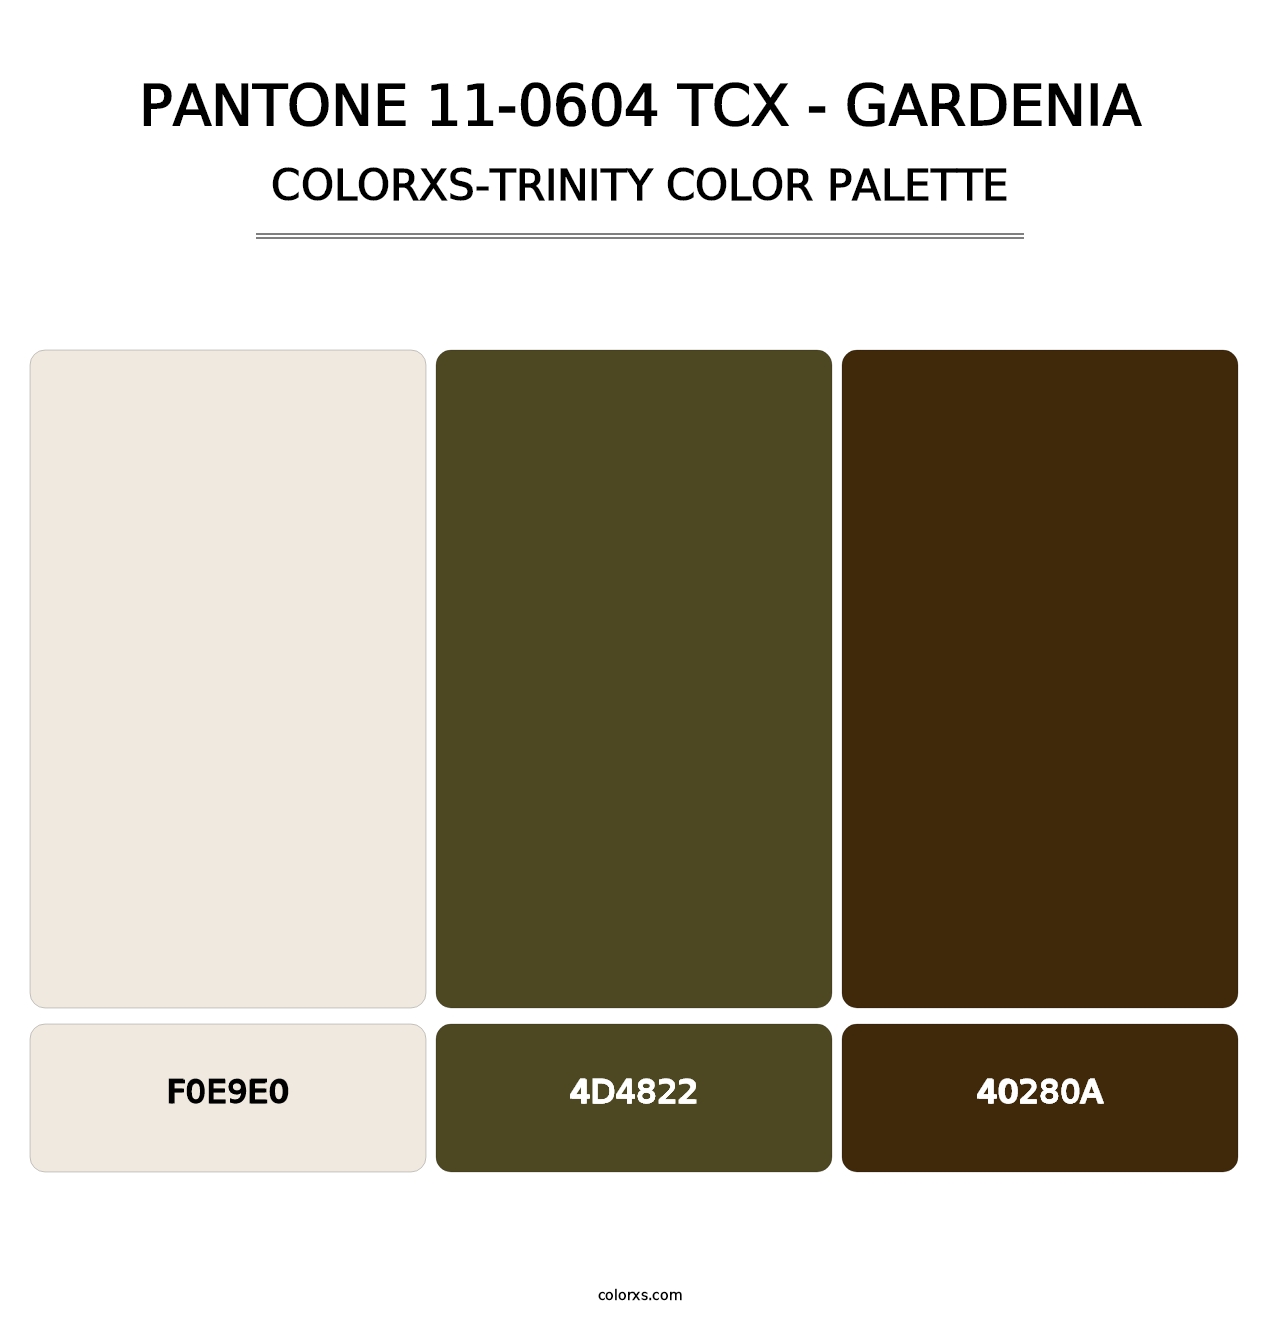 PANTONE 11-0604 TCX - Gardenia - Colorxs Trinity Palette